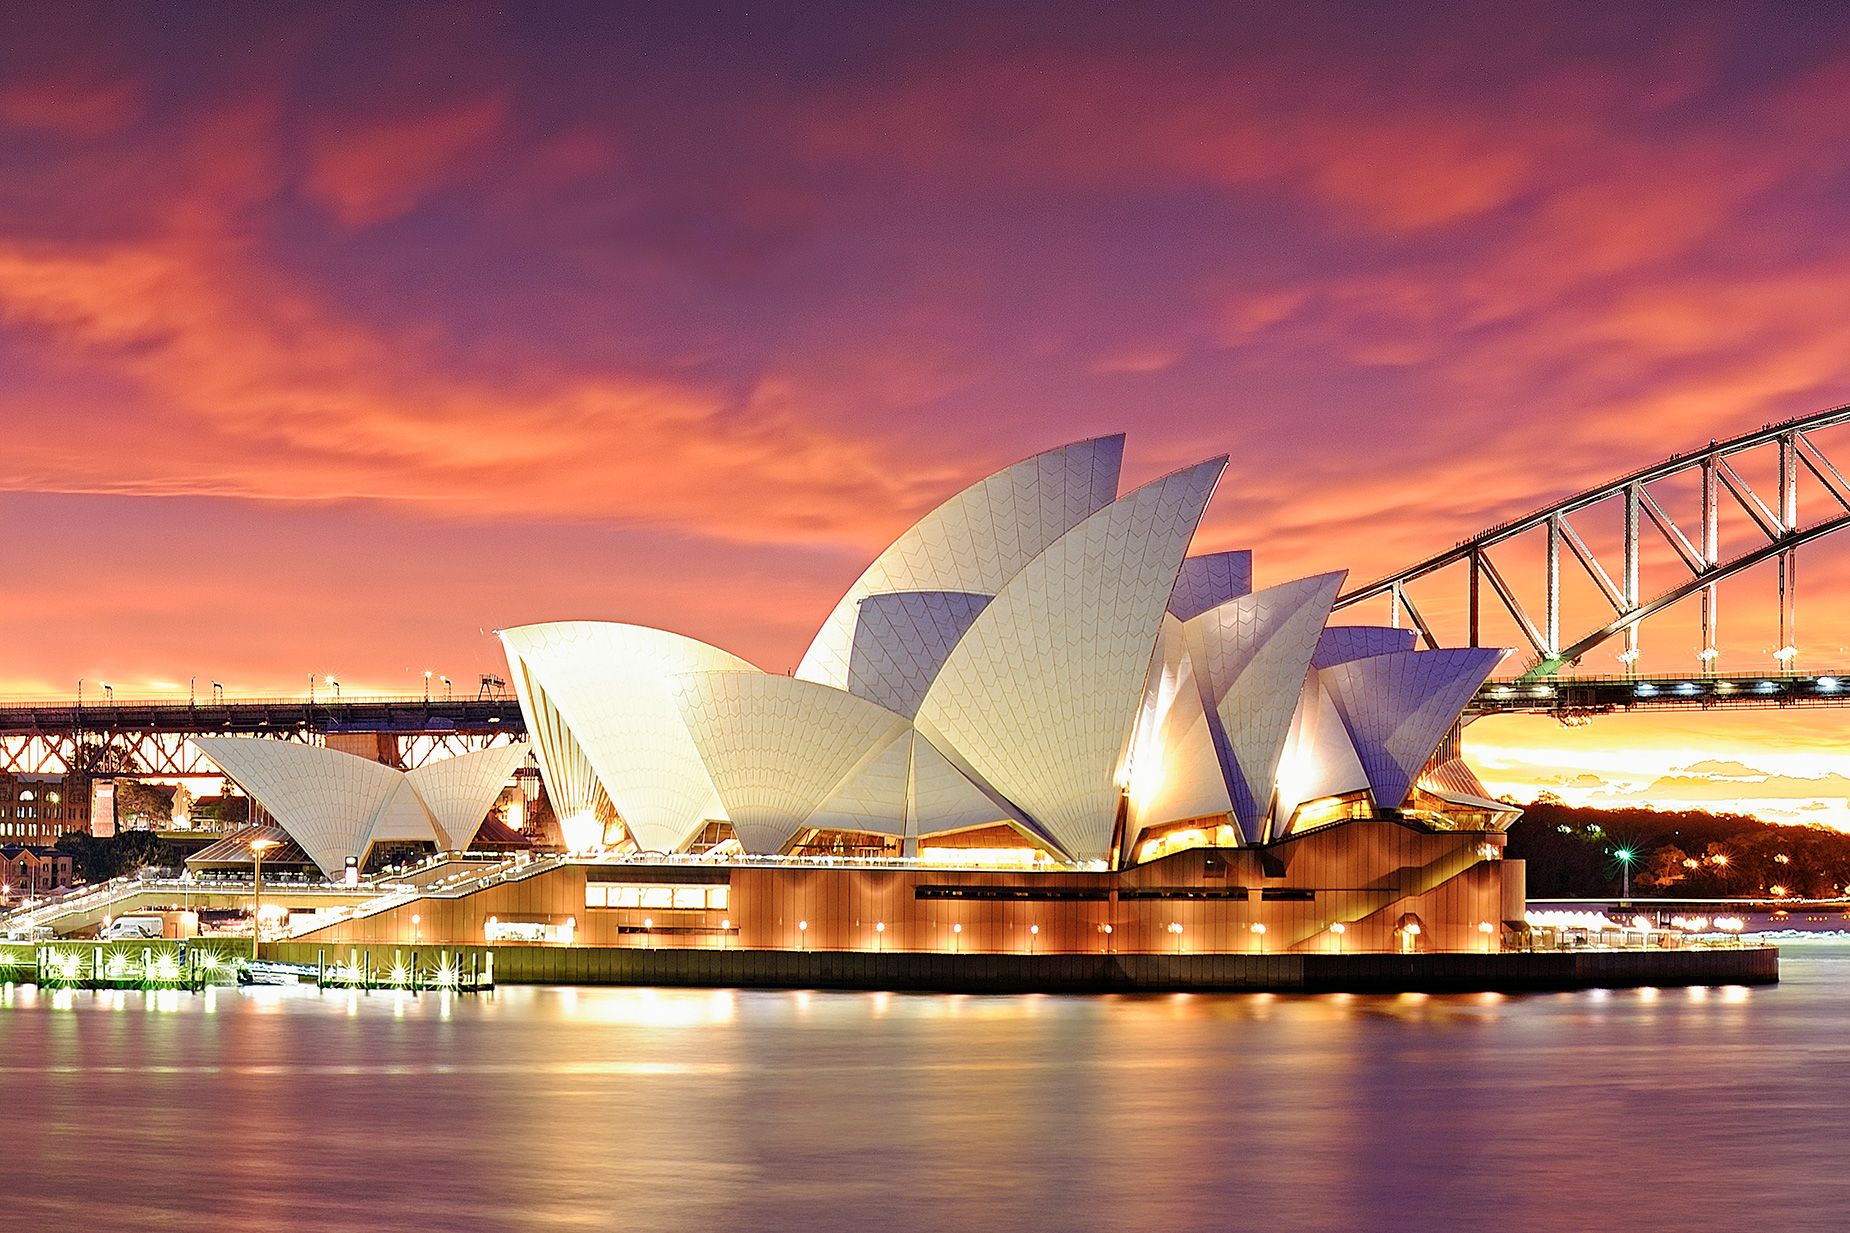 Sydney Opera House: Australia's most famous attraction turns 50 | CNN